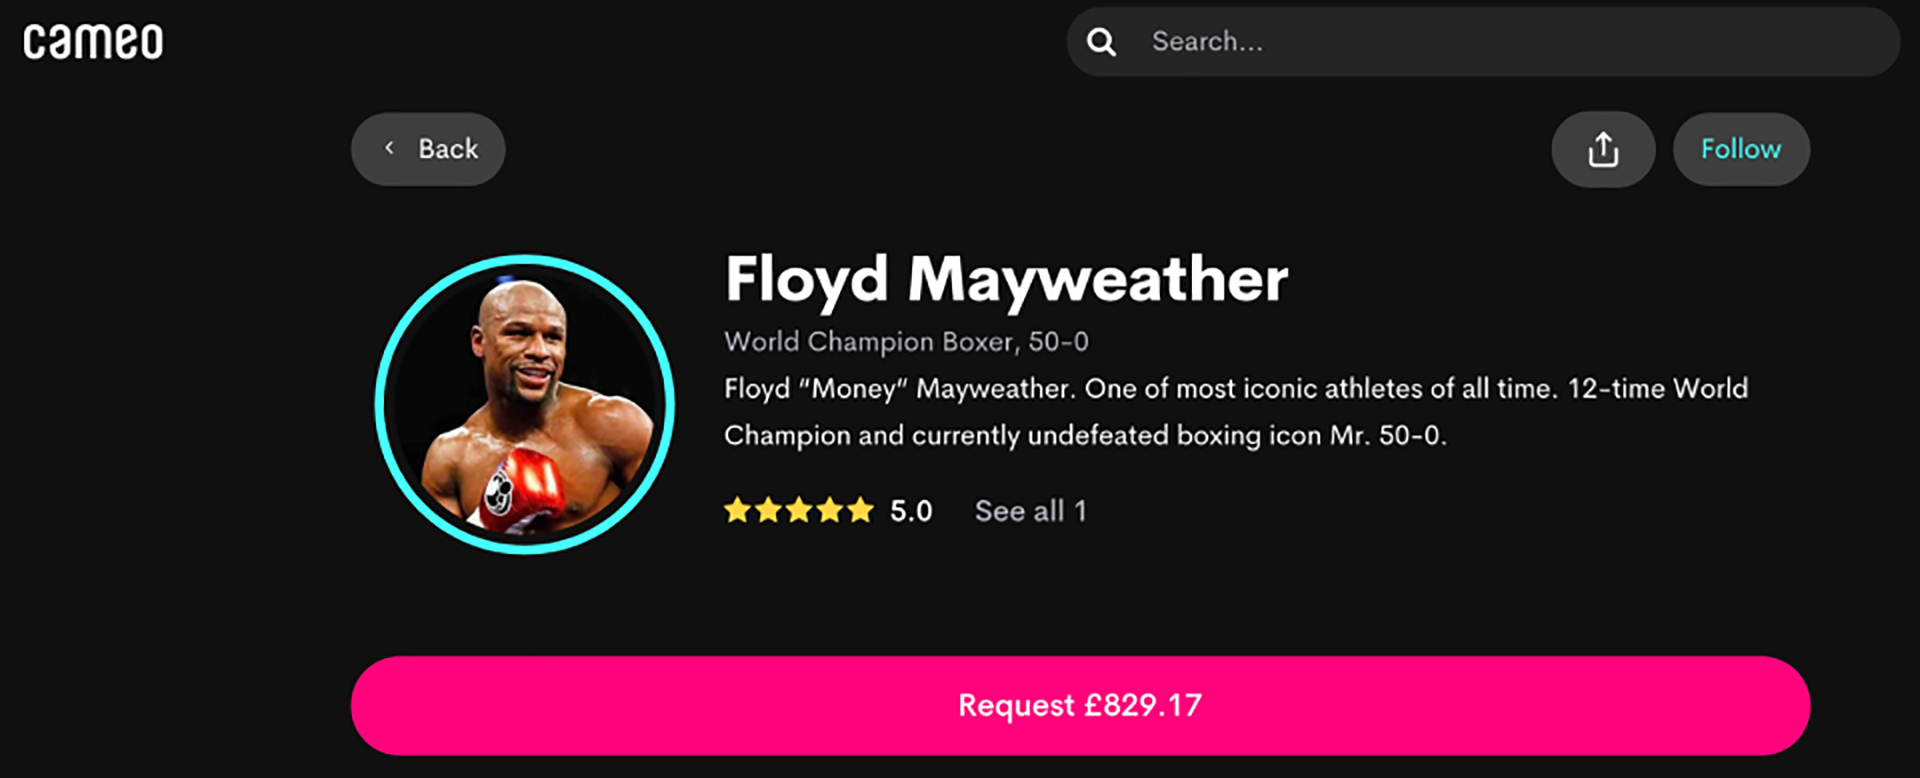 El perfil de Floyd Mayweather